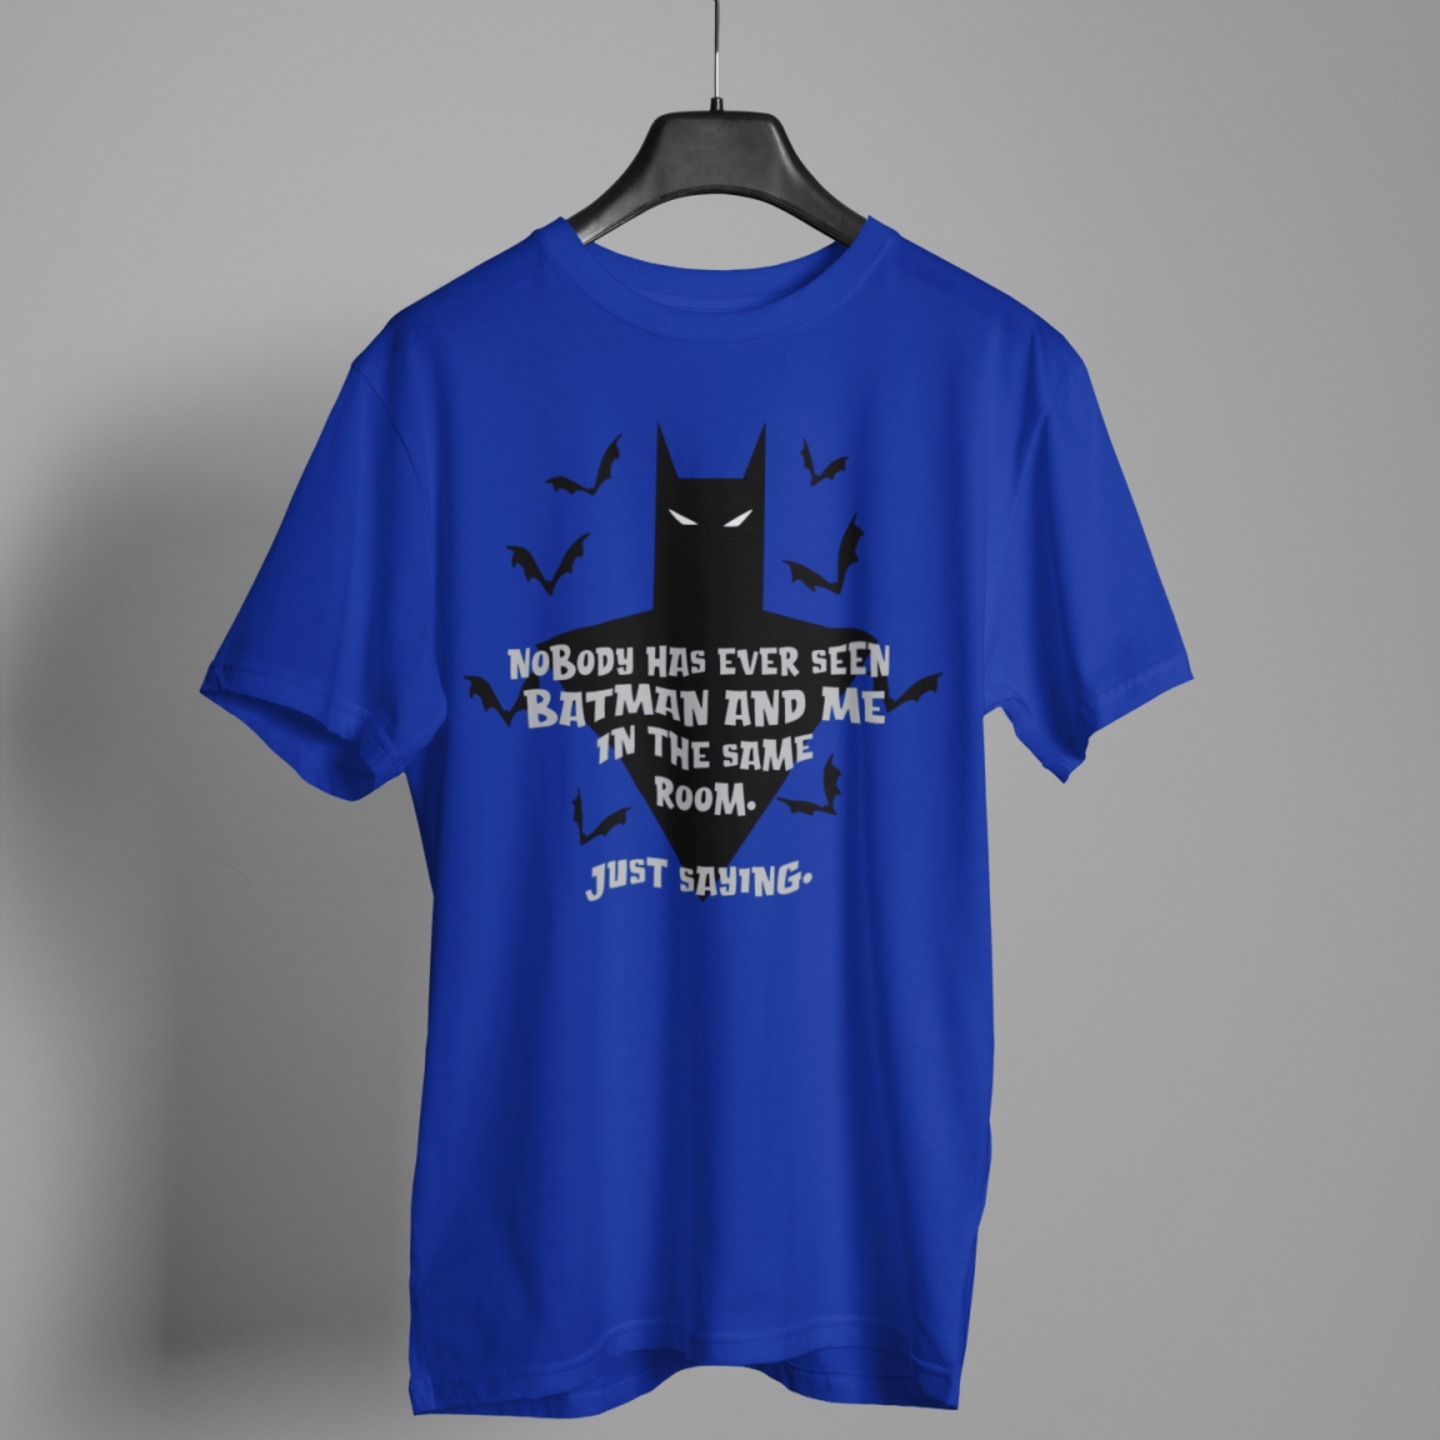 Nobody Ever Seen- Batman T-shirt for Boys